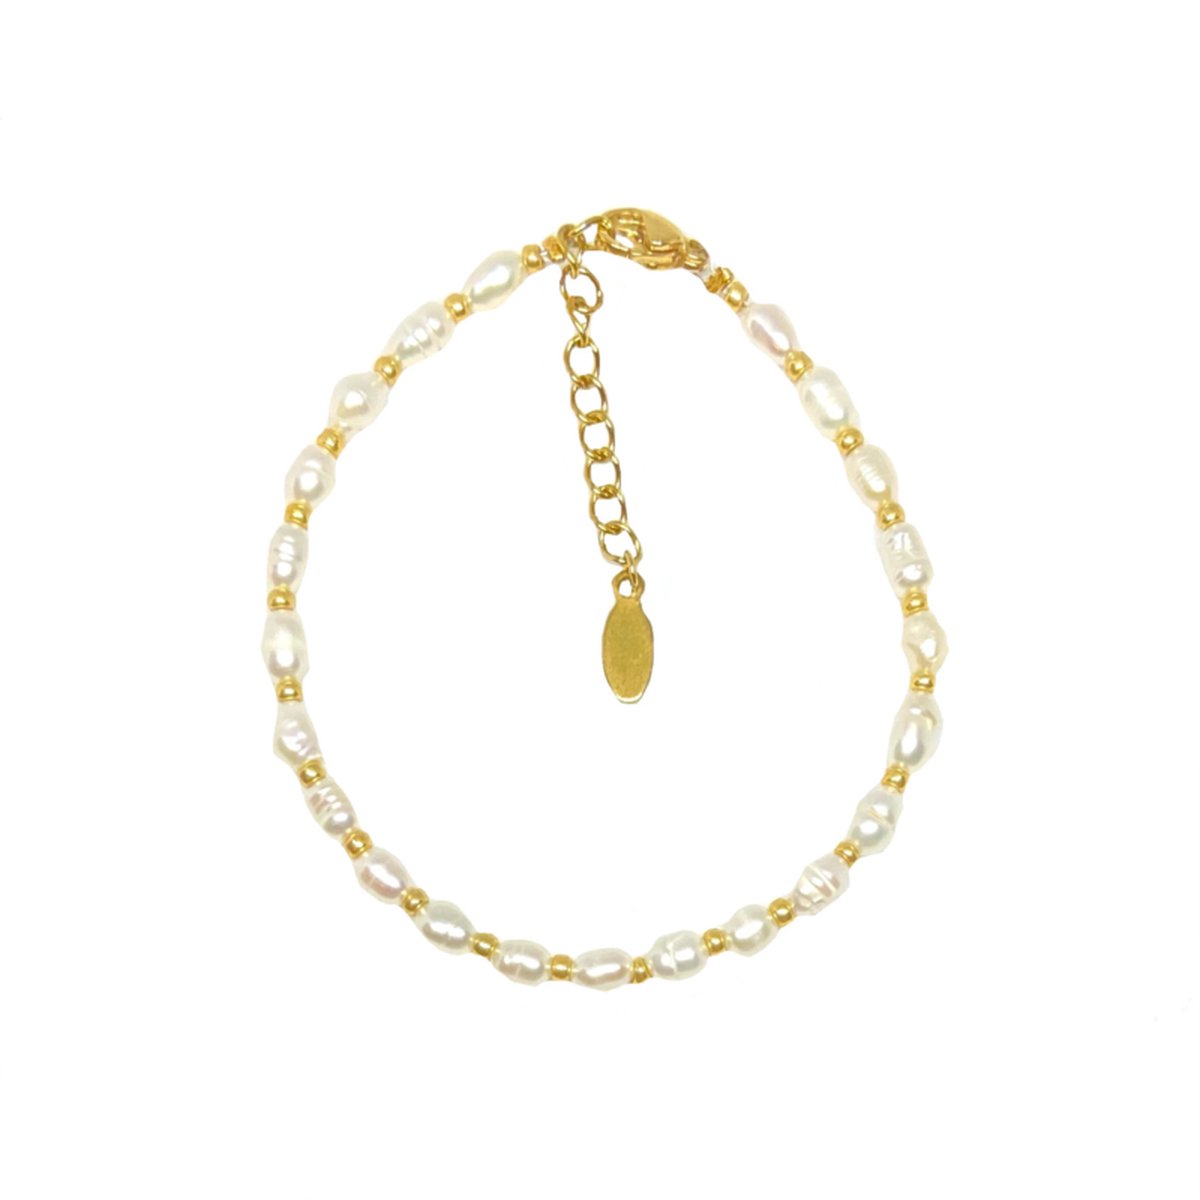 Pearls & beads bracelet - gold